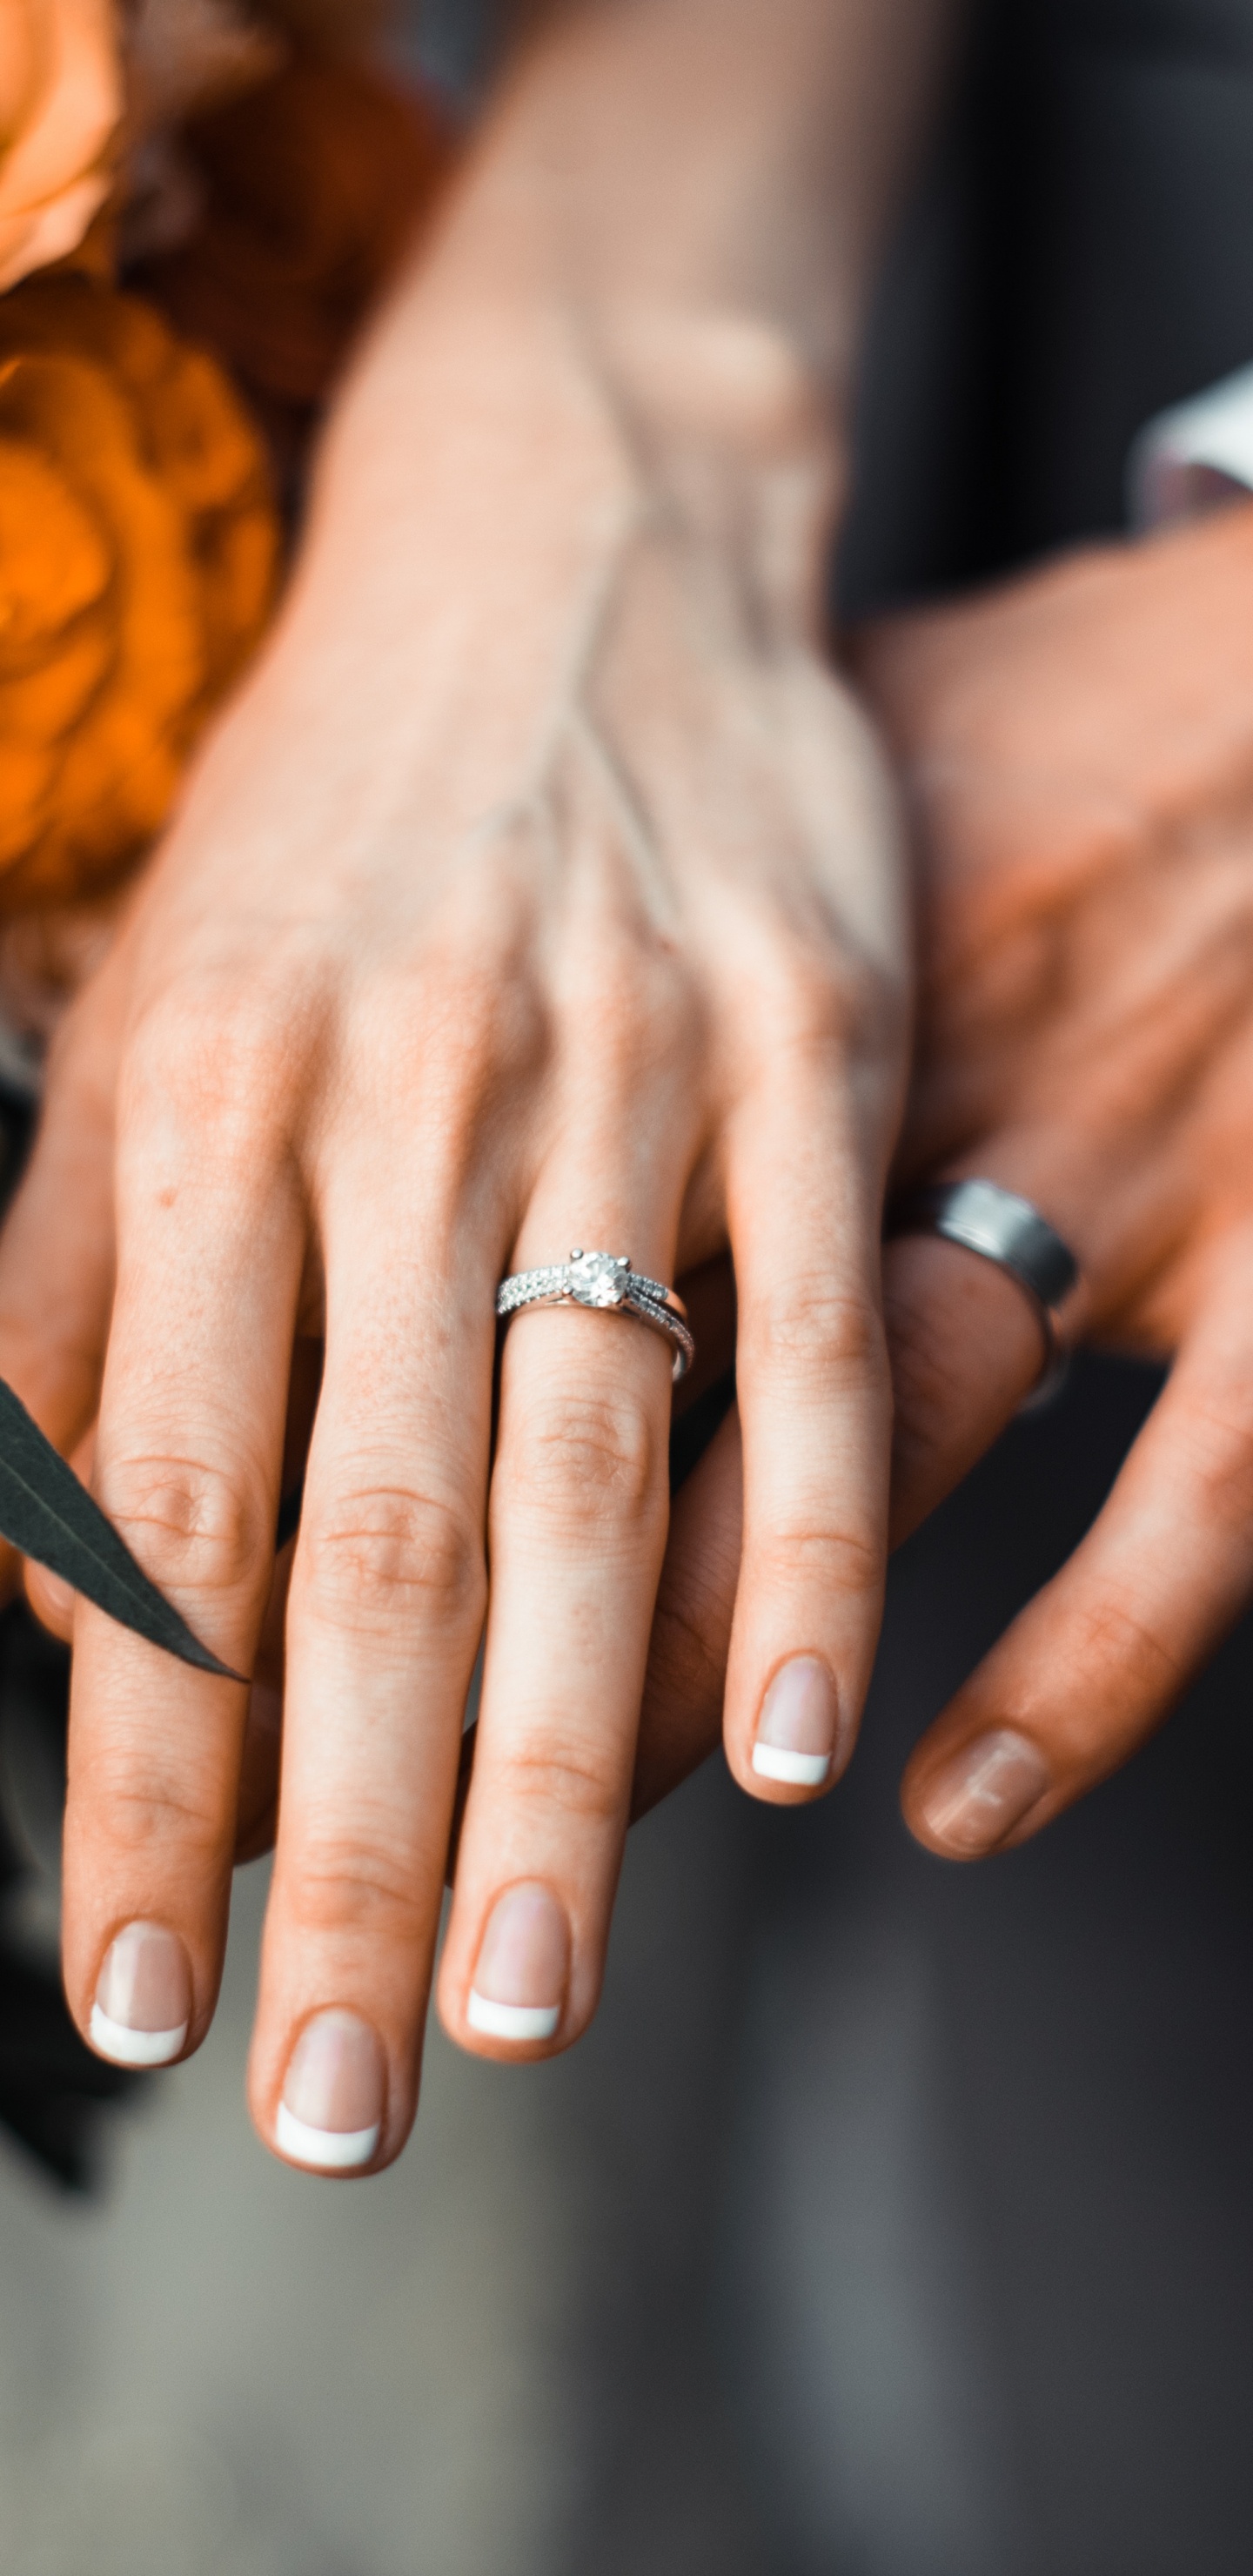 Ring, Wedding Ring, Engagement Ring, Wedding, Engagement. Wallpaper in 1440x2960 Resolution